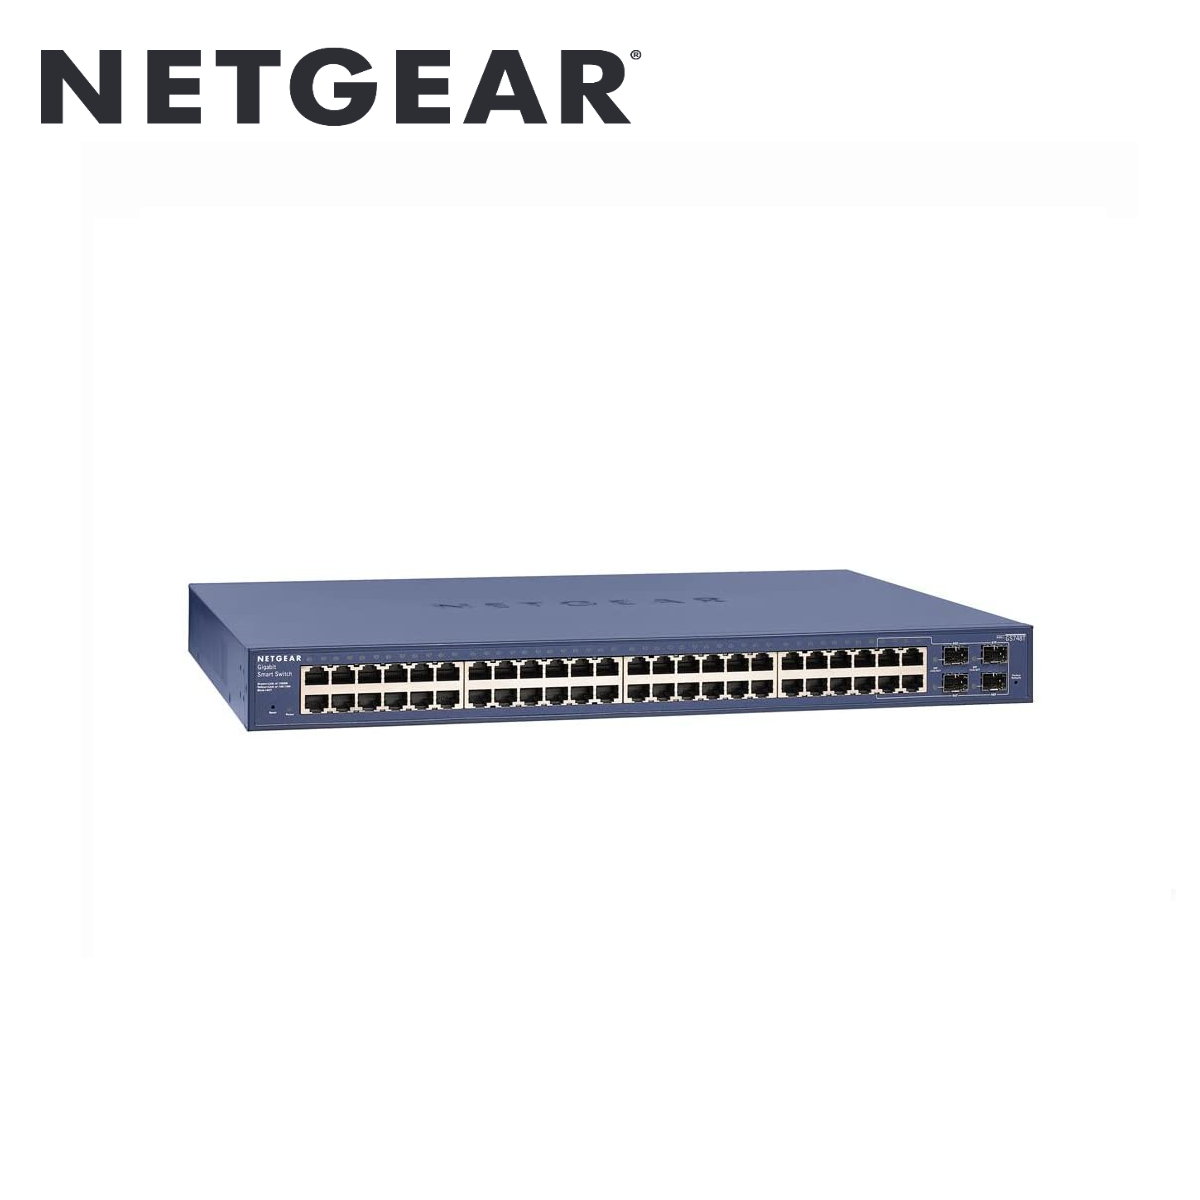 Dedicated Switch Ports(GS748 48-Port NetgearStorePH – SFP Ethernet Smart 2 Gigabit With